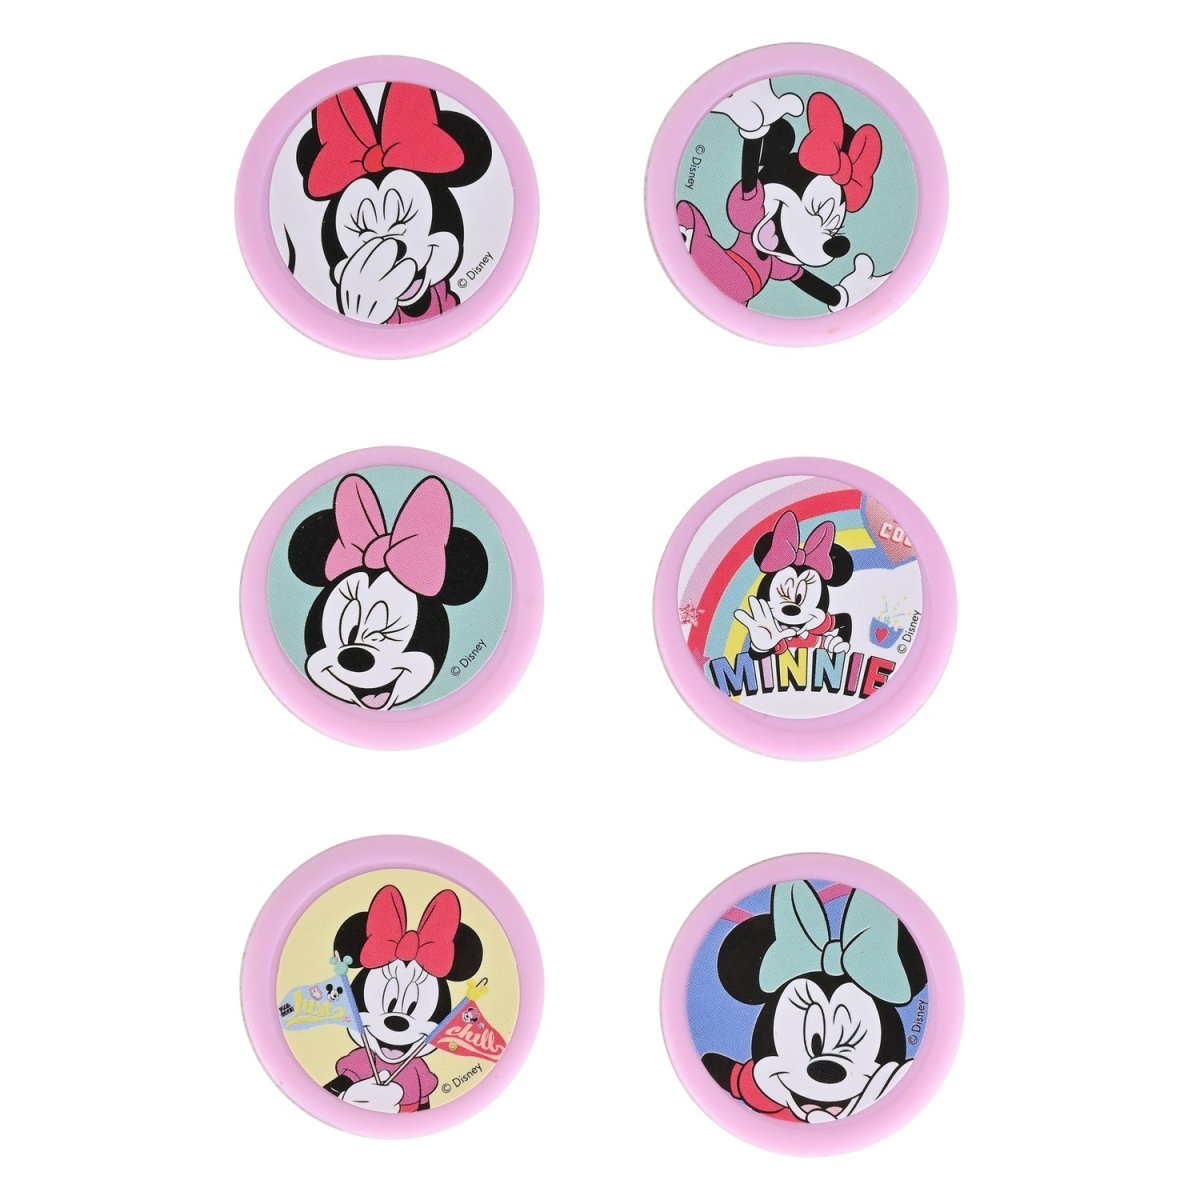 Disney Minnie Disc Shooter Digital Watch- Pink - TRHA22125